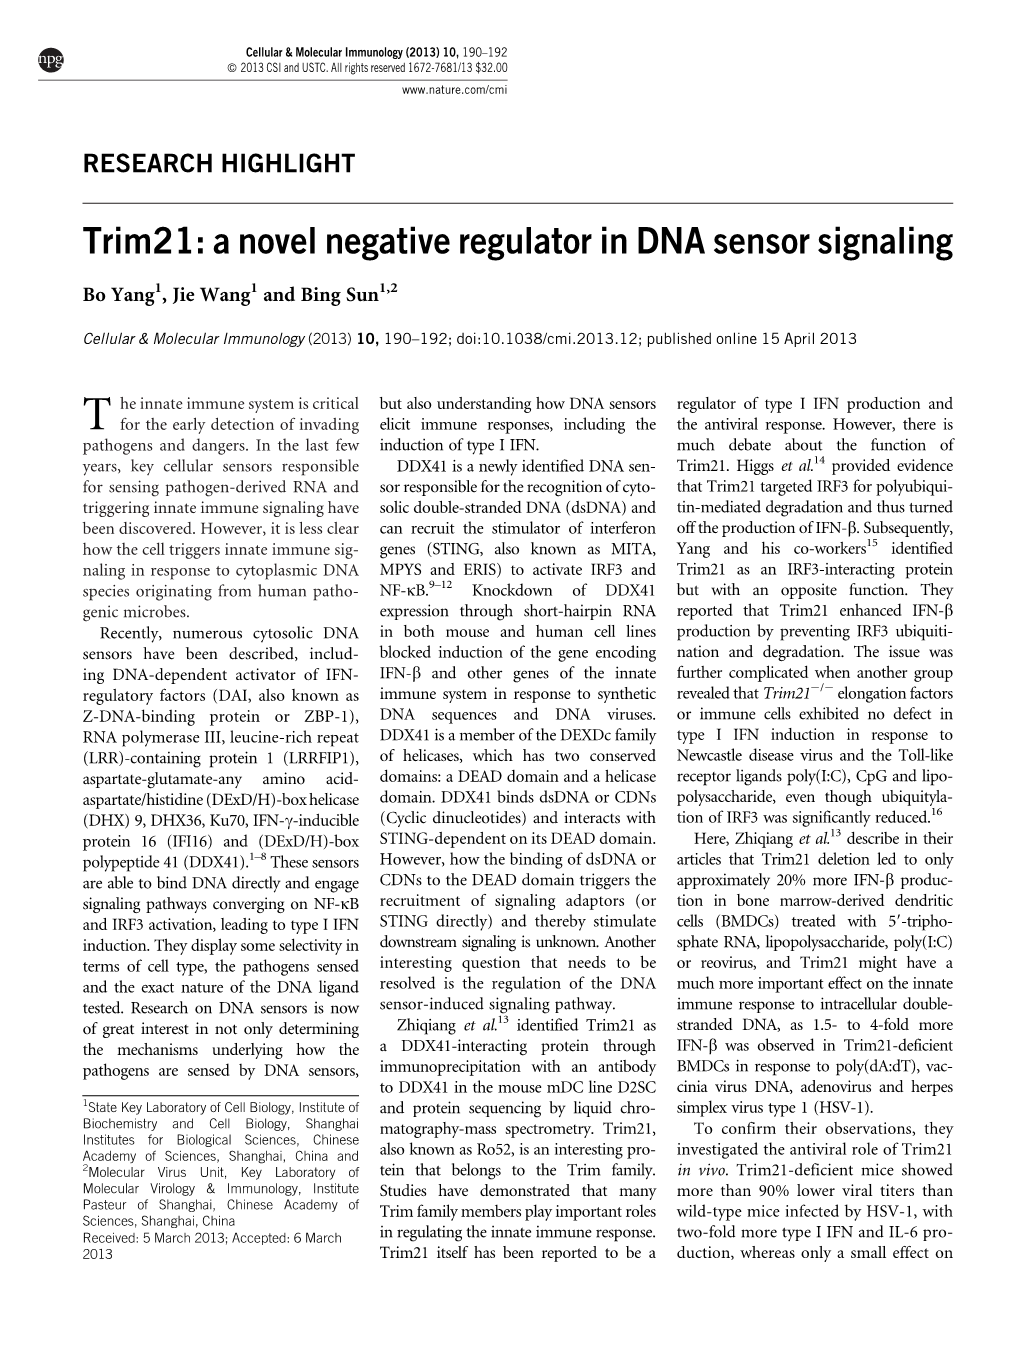 A Novel Negative Regulator in DNA Sensor Signaling